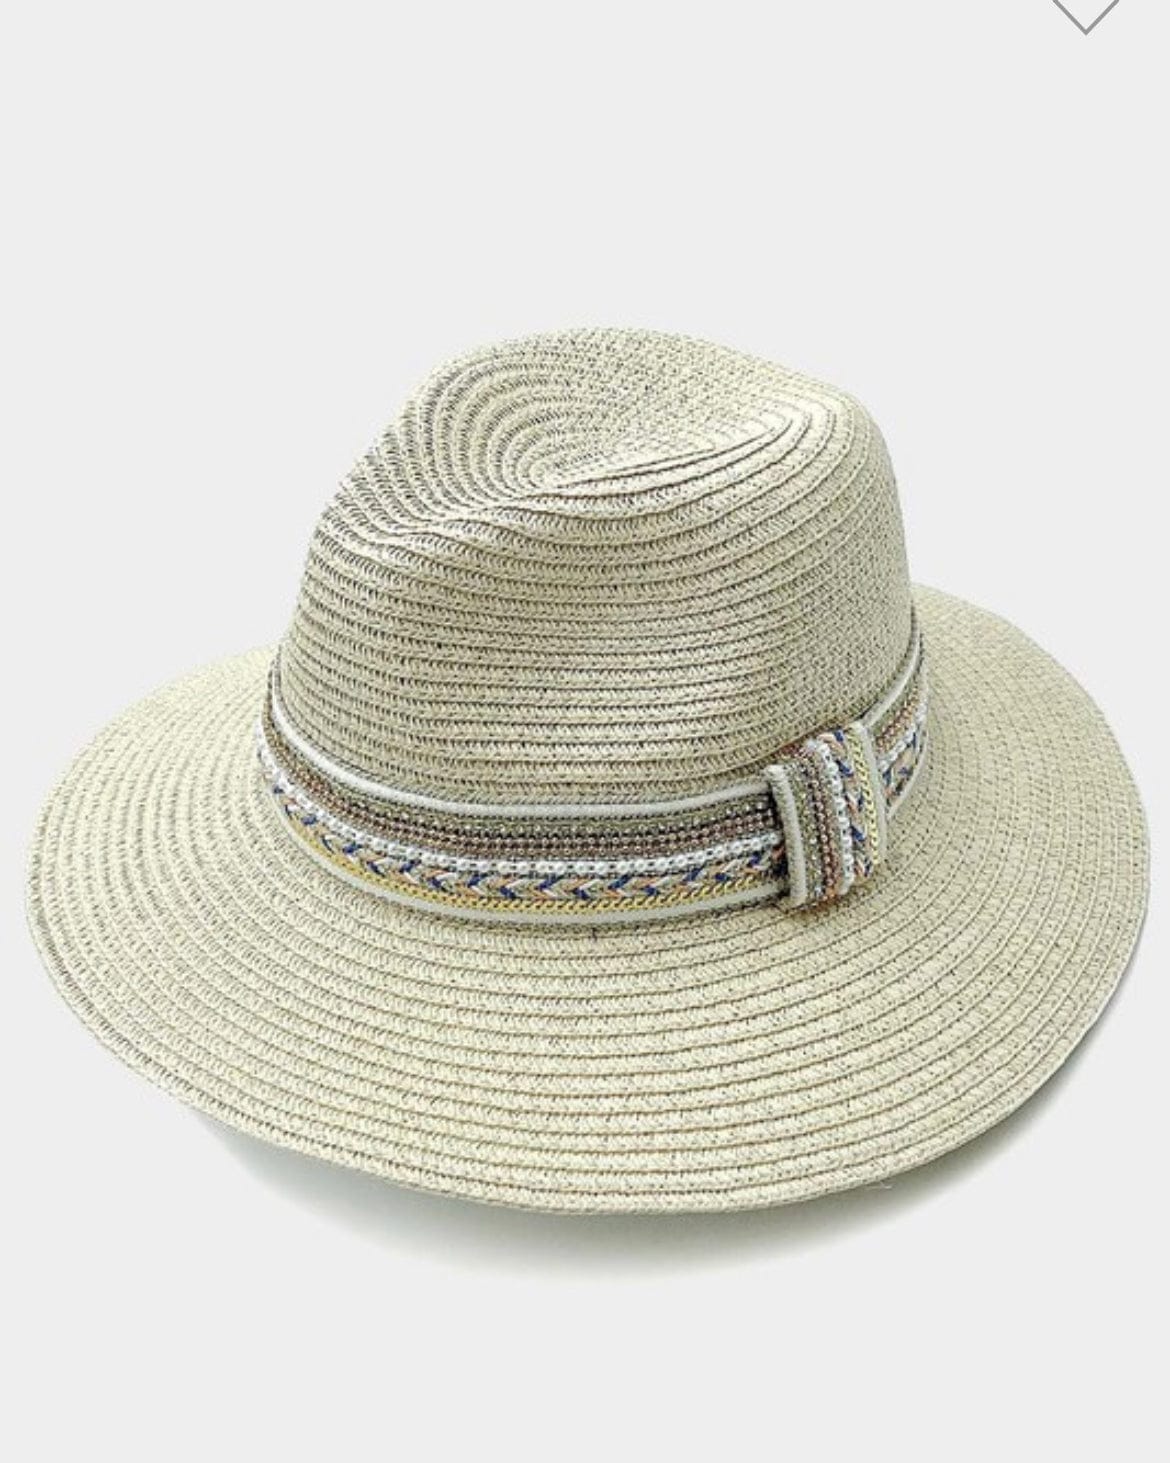 Pearl embellished Panama sun hat